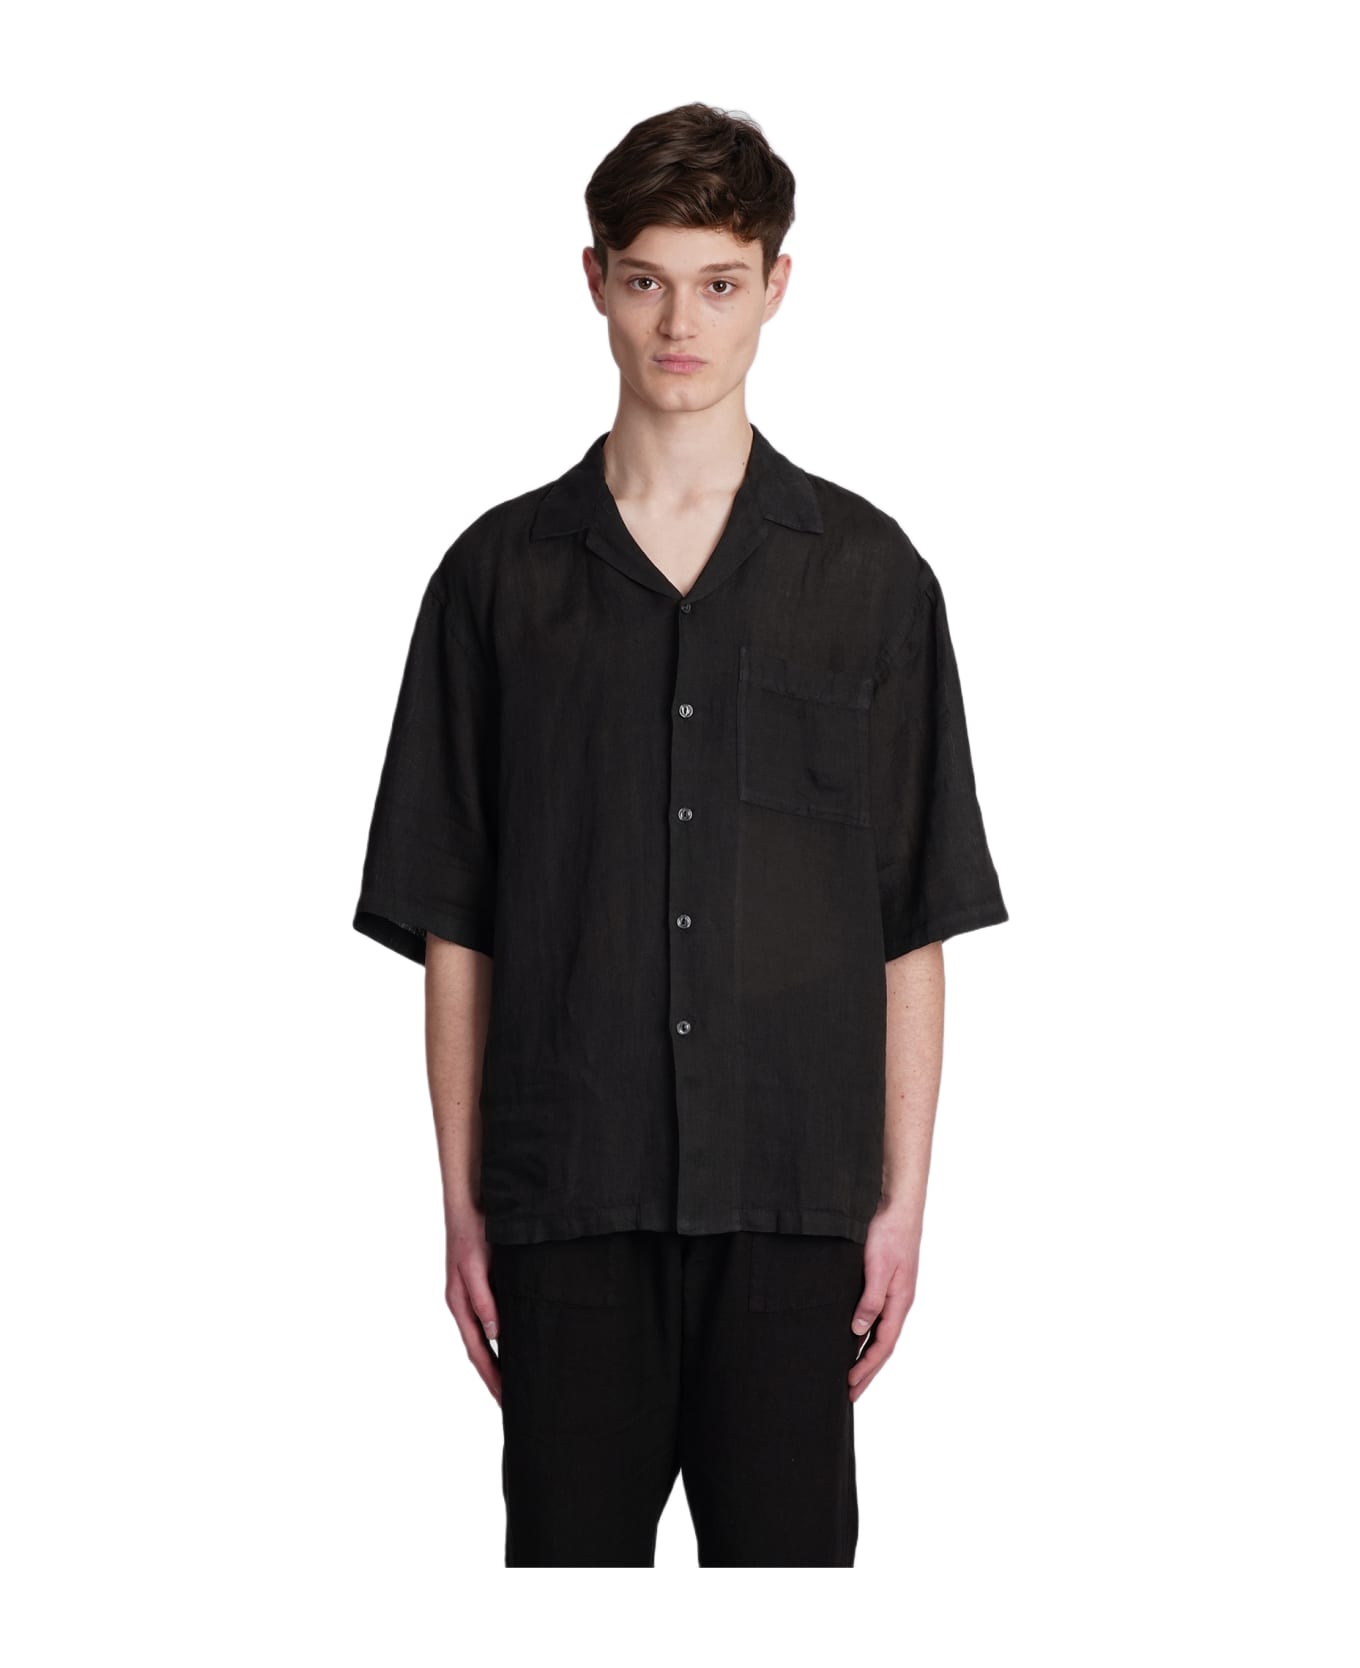 120% Lino Shirt In Black Linen - black シャツ